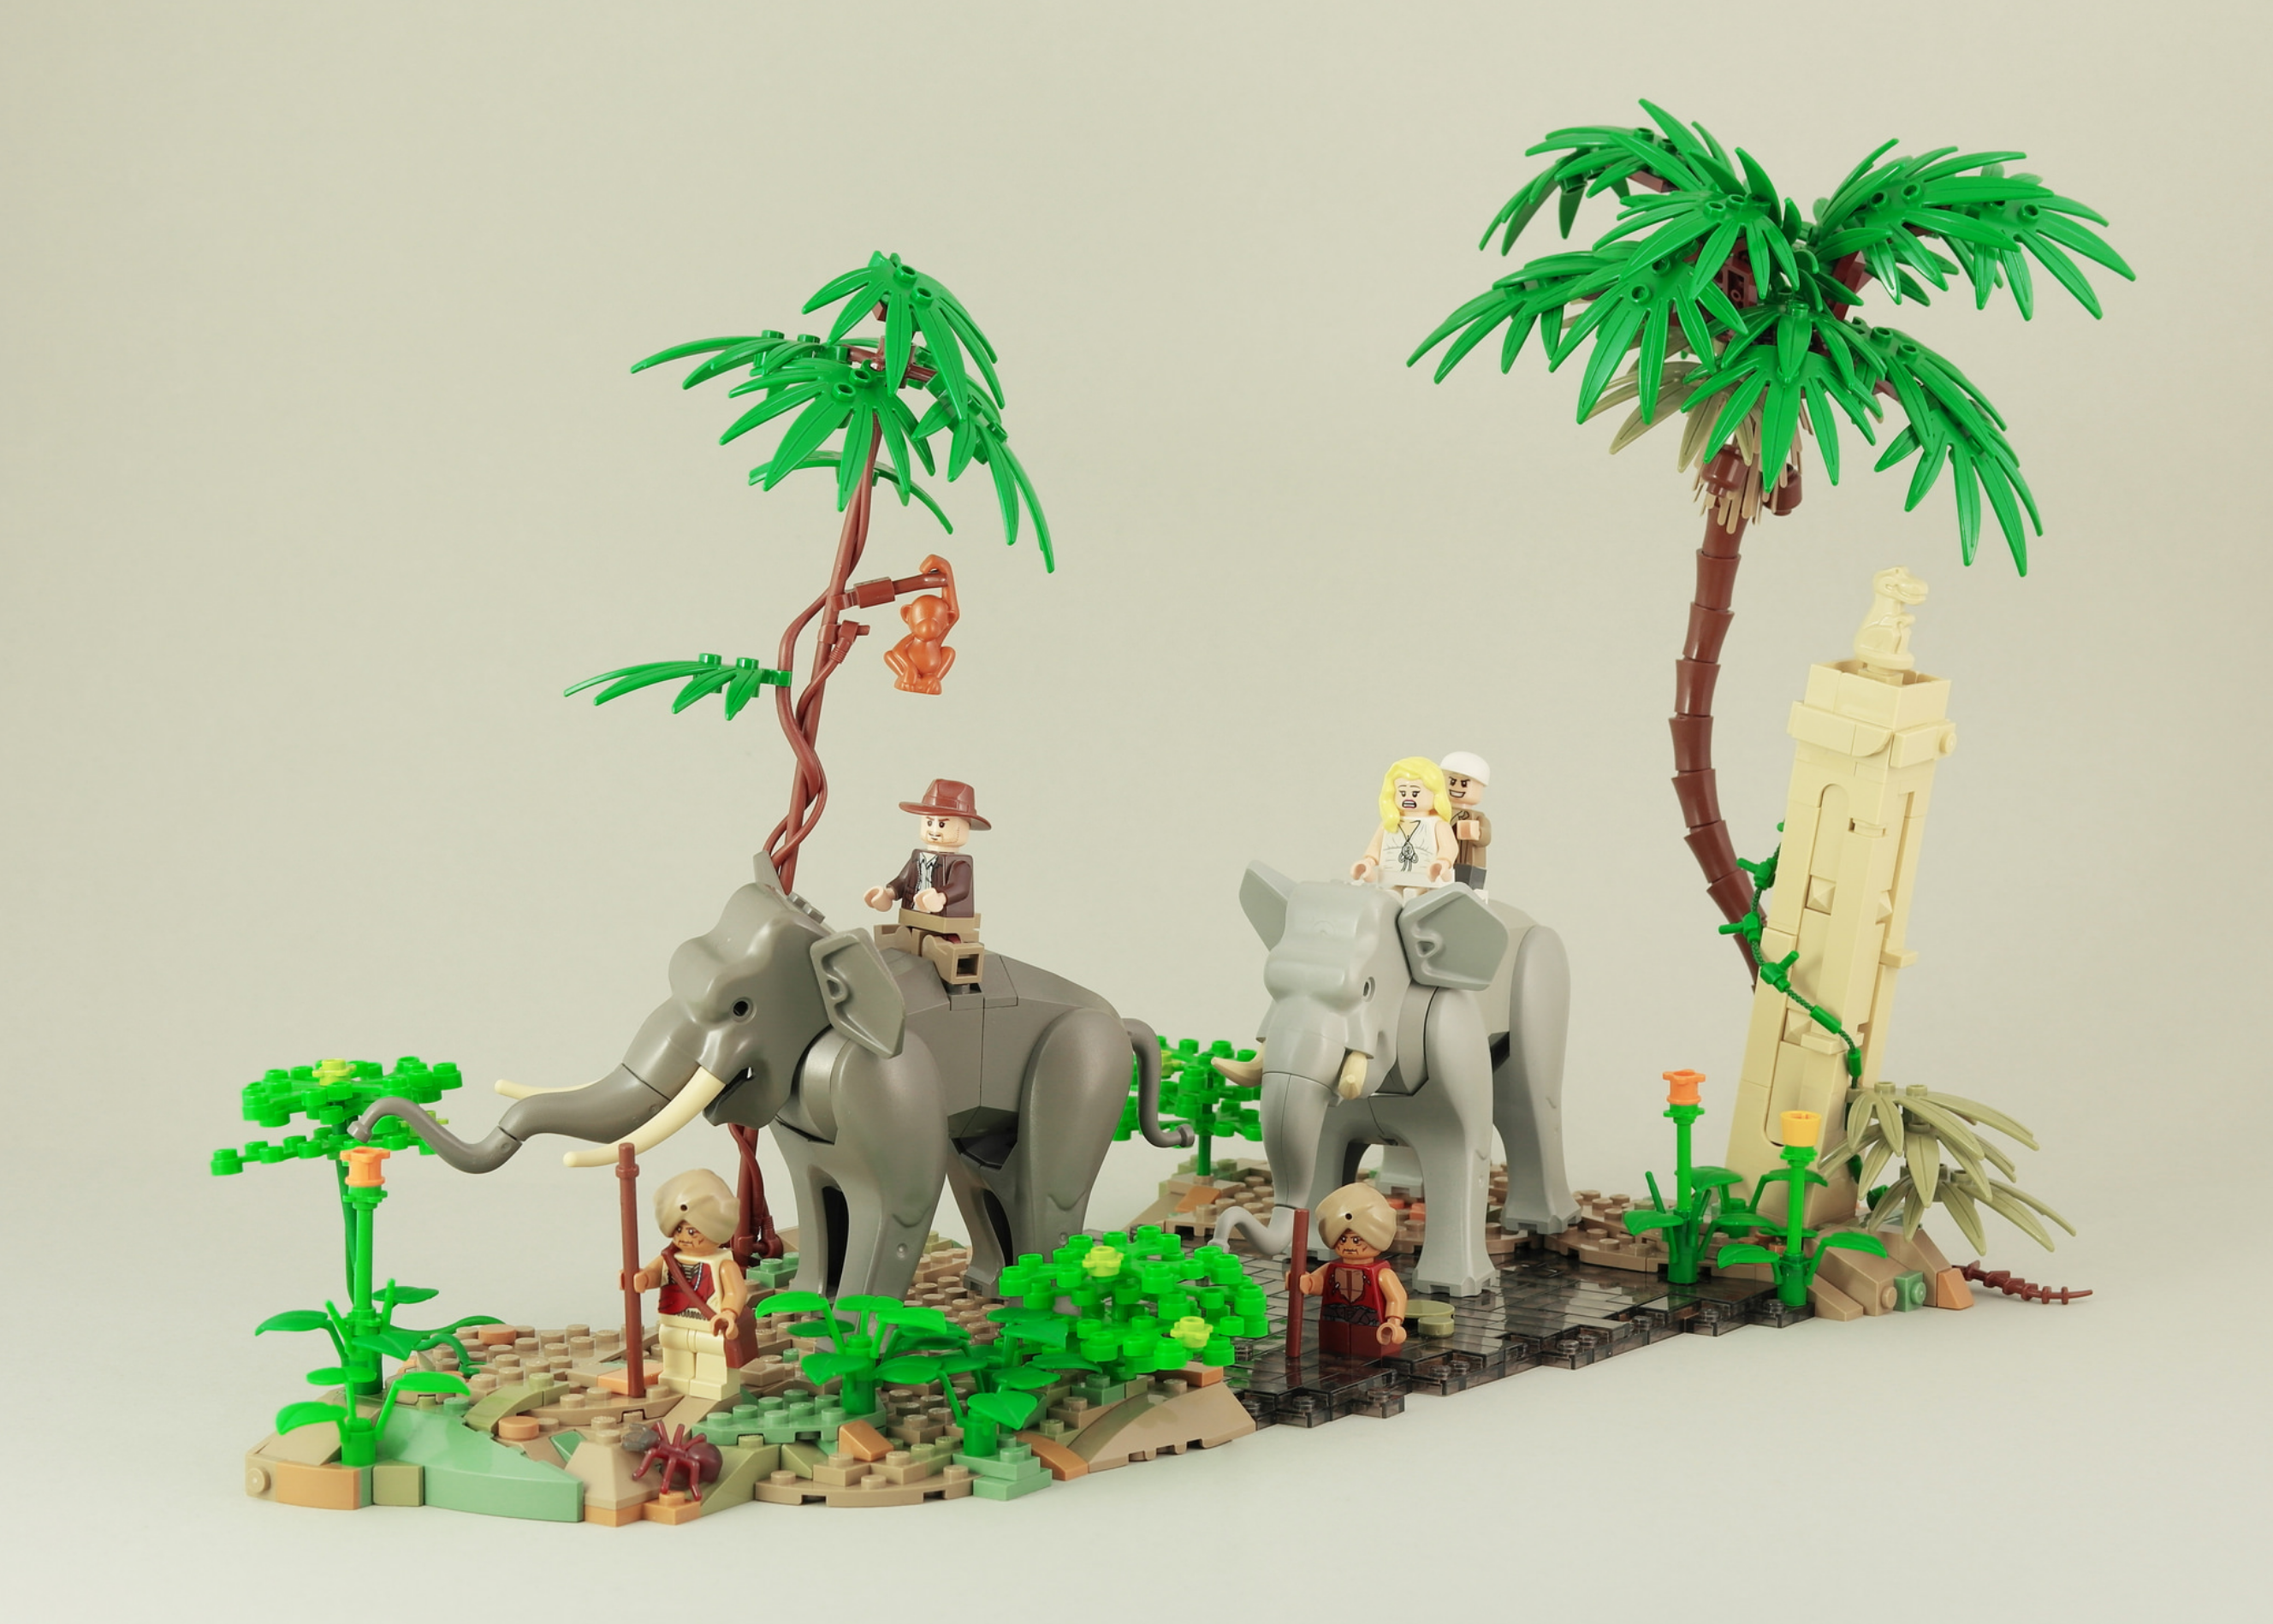 LEGO Olifanten MOC 3 - veel bouwplezier